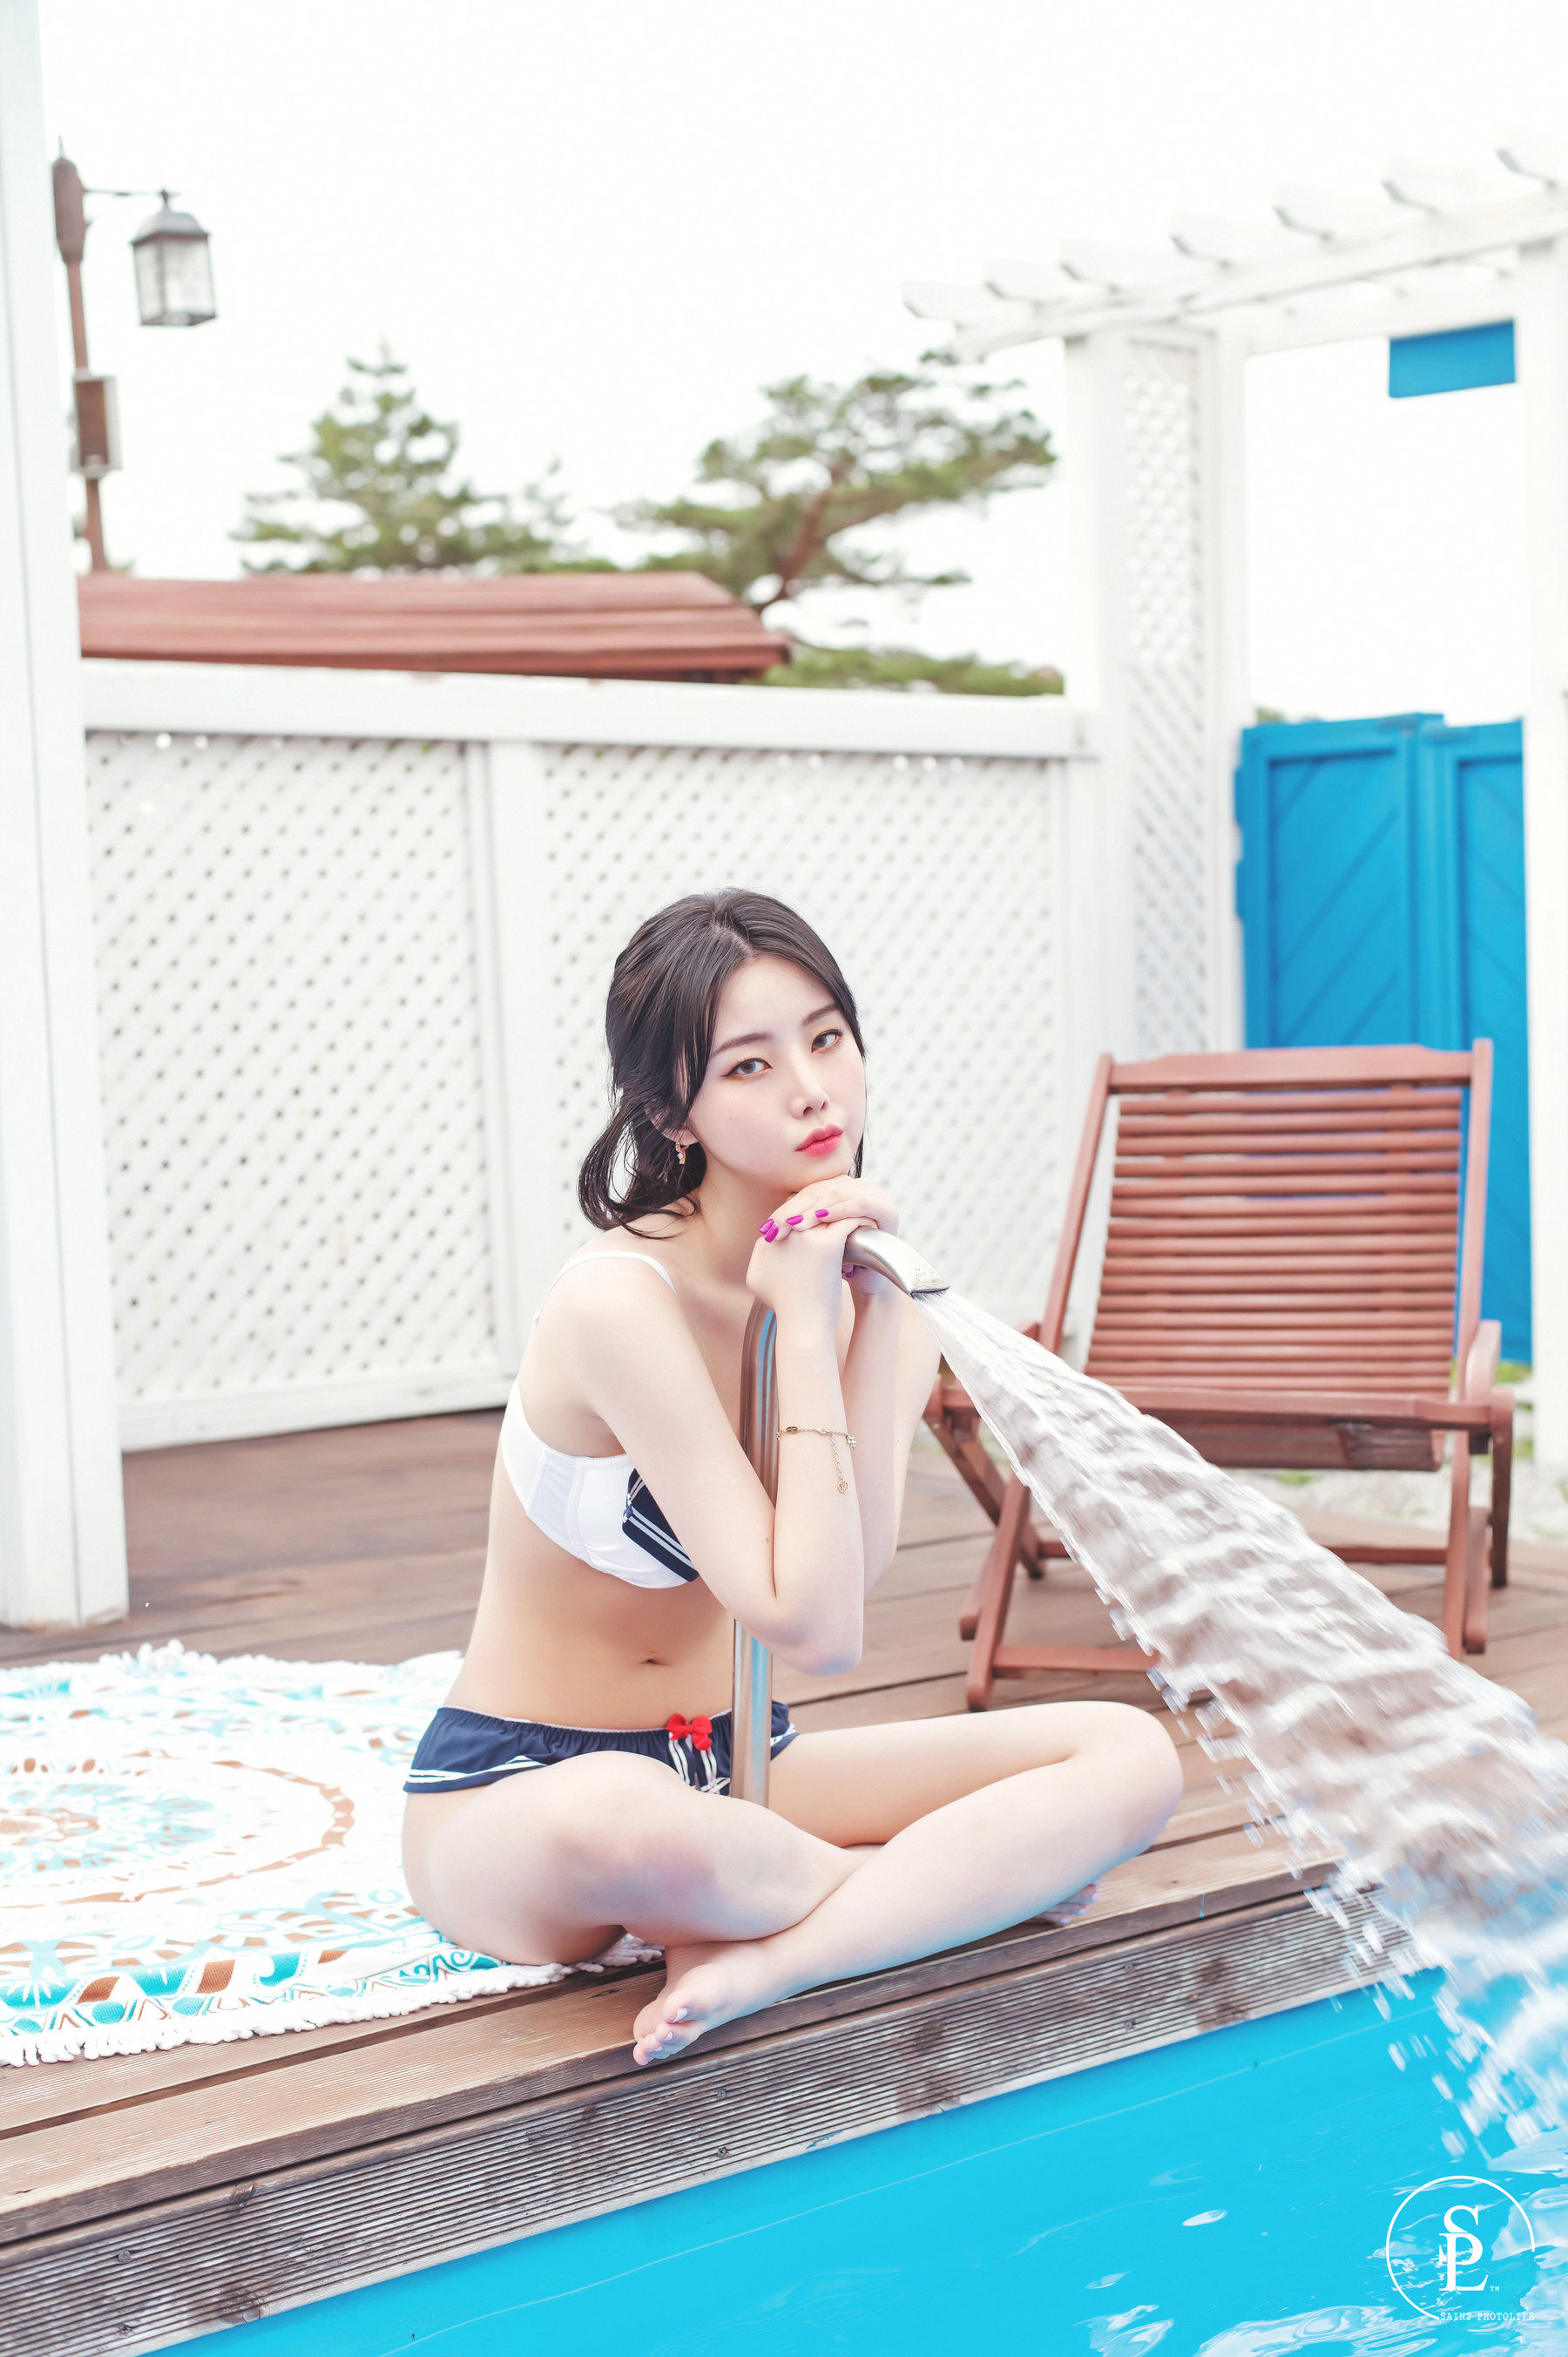 [saintphotolife] Yuna - No.31 Hello! Yangyang  第69张